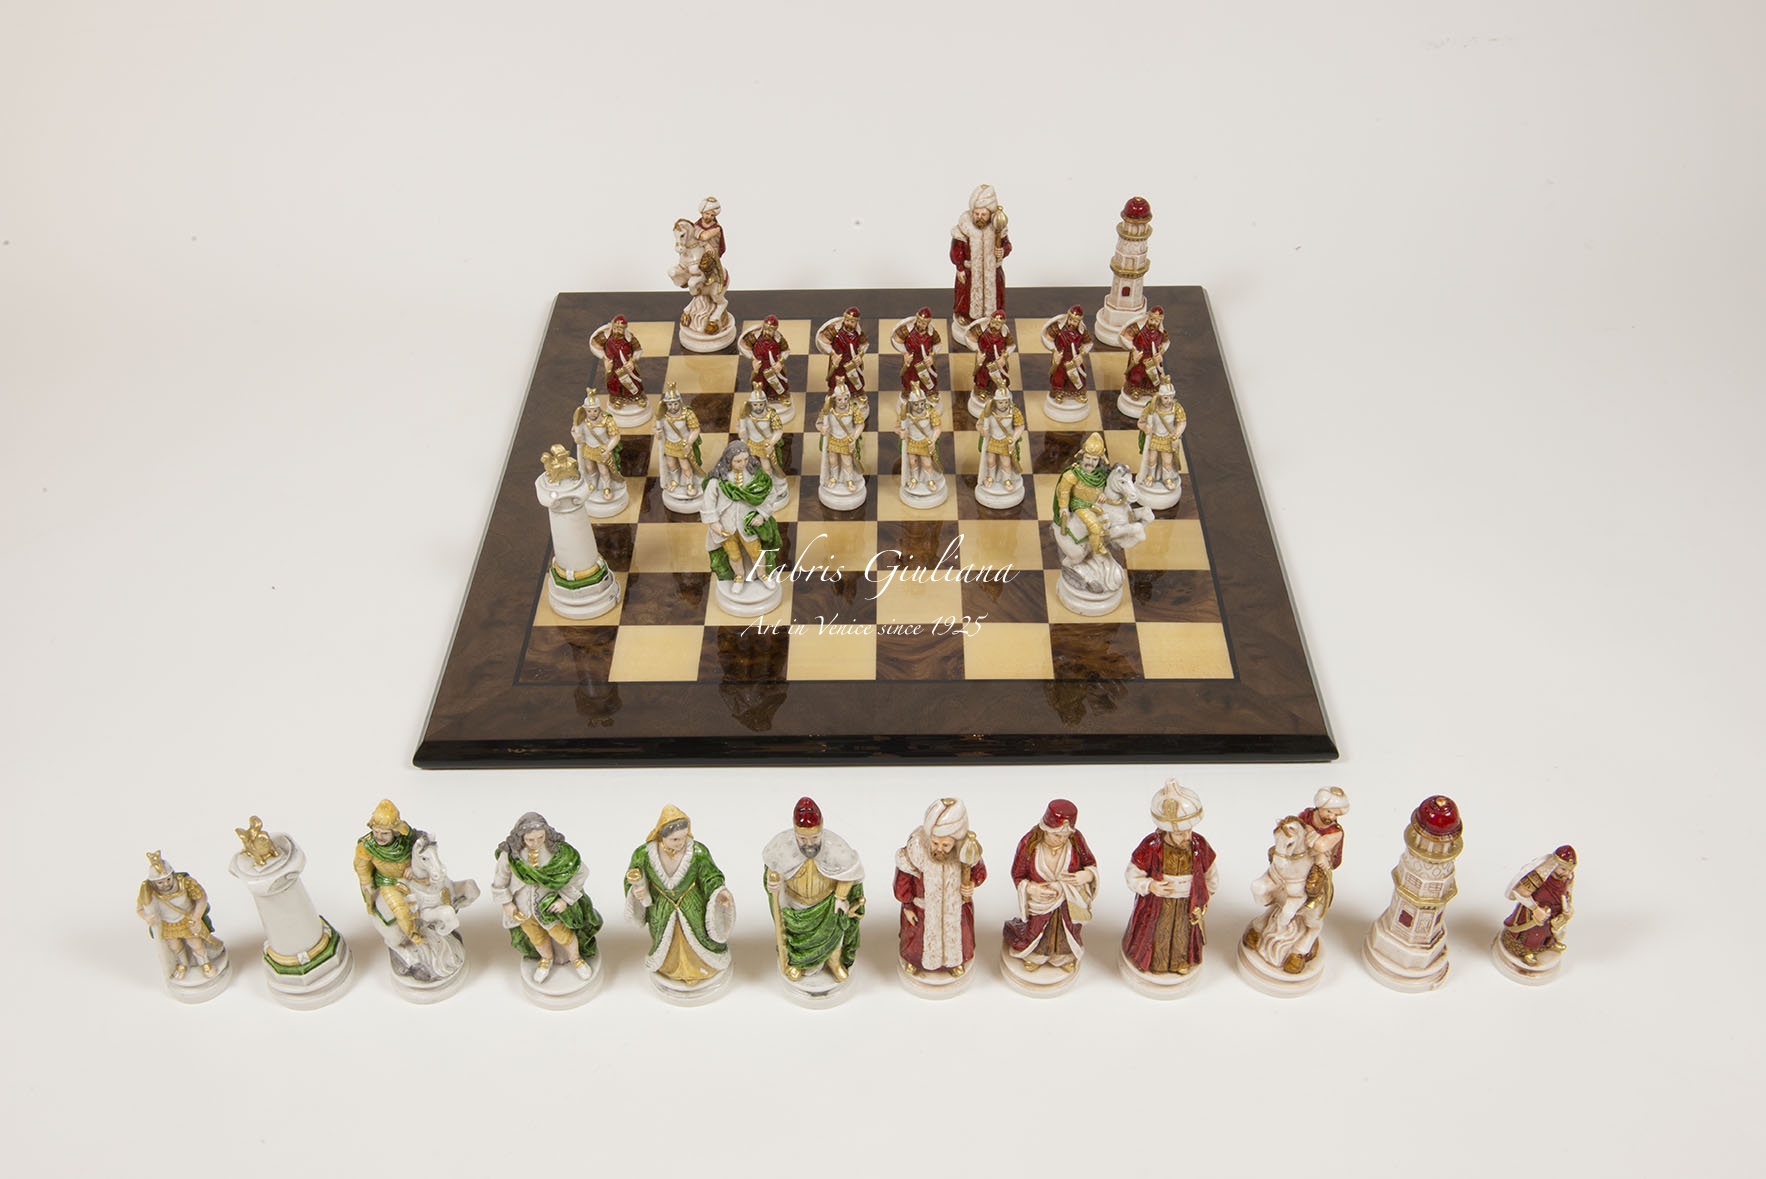 Battle of Lepanto Chess Set - Medium